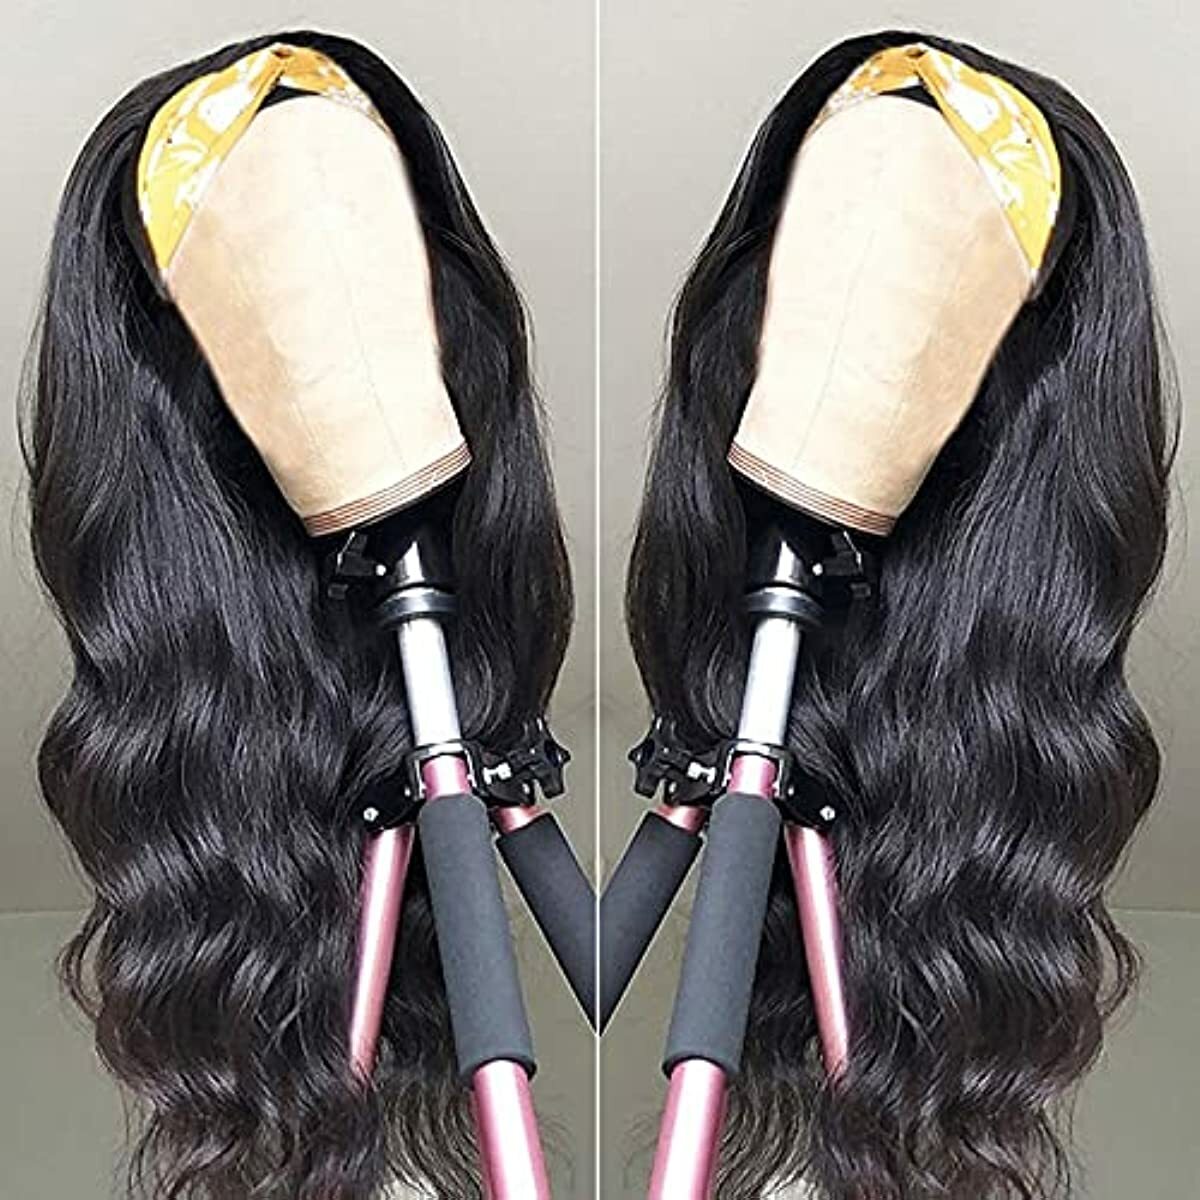 catti Headband Wigs for Black Women Body Wave Headband Wig Human Hair Wigs Brazilian Virgin Hair Machine Made Wigs Headband Wig 150% Density (18" Headband wigs)